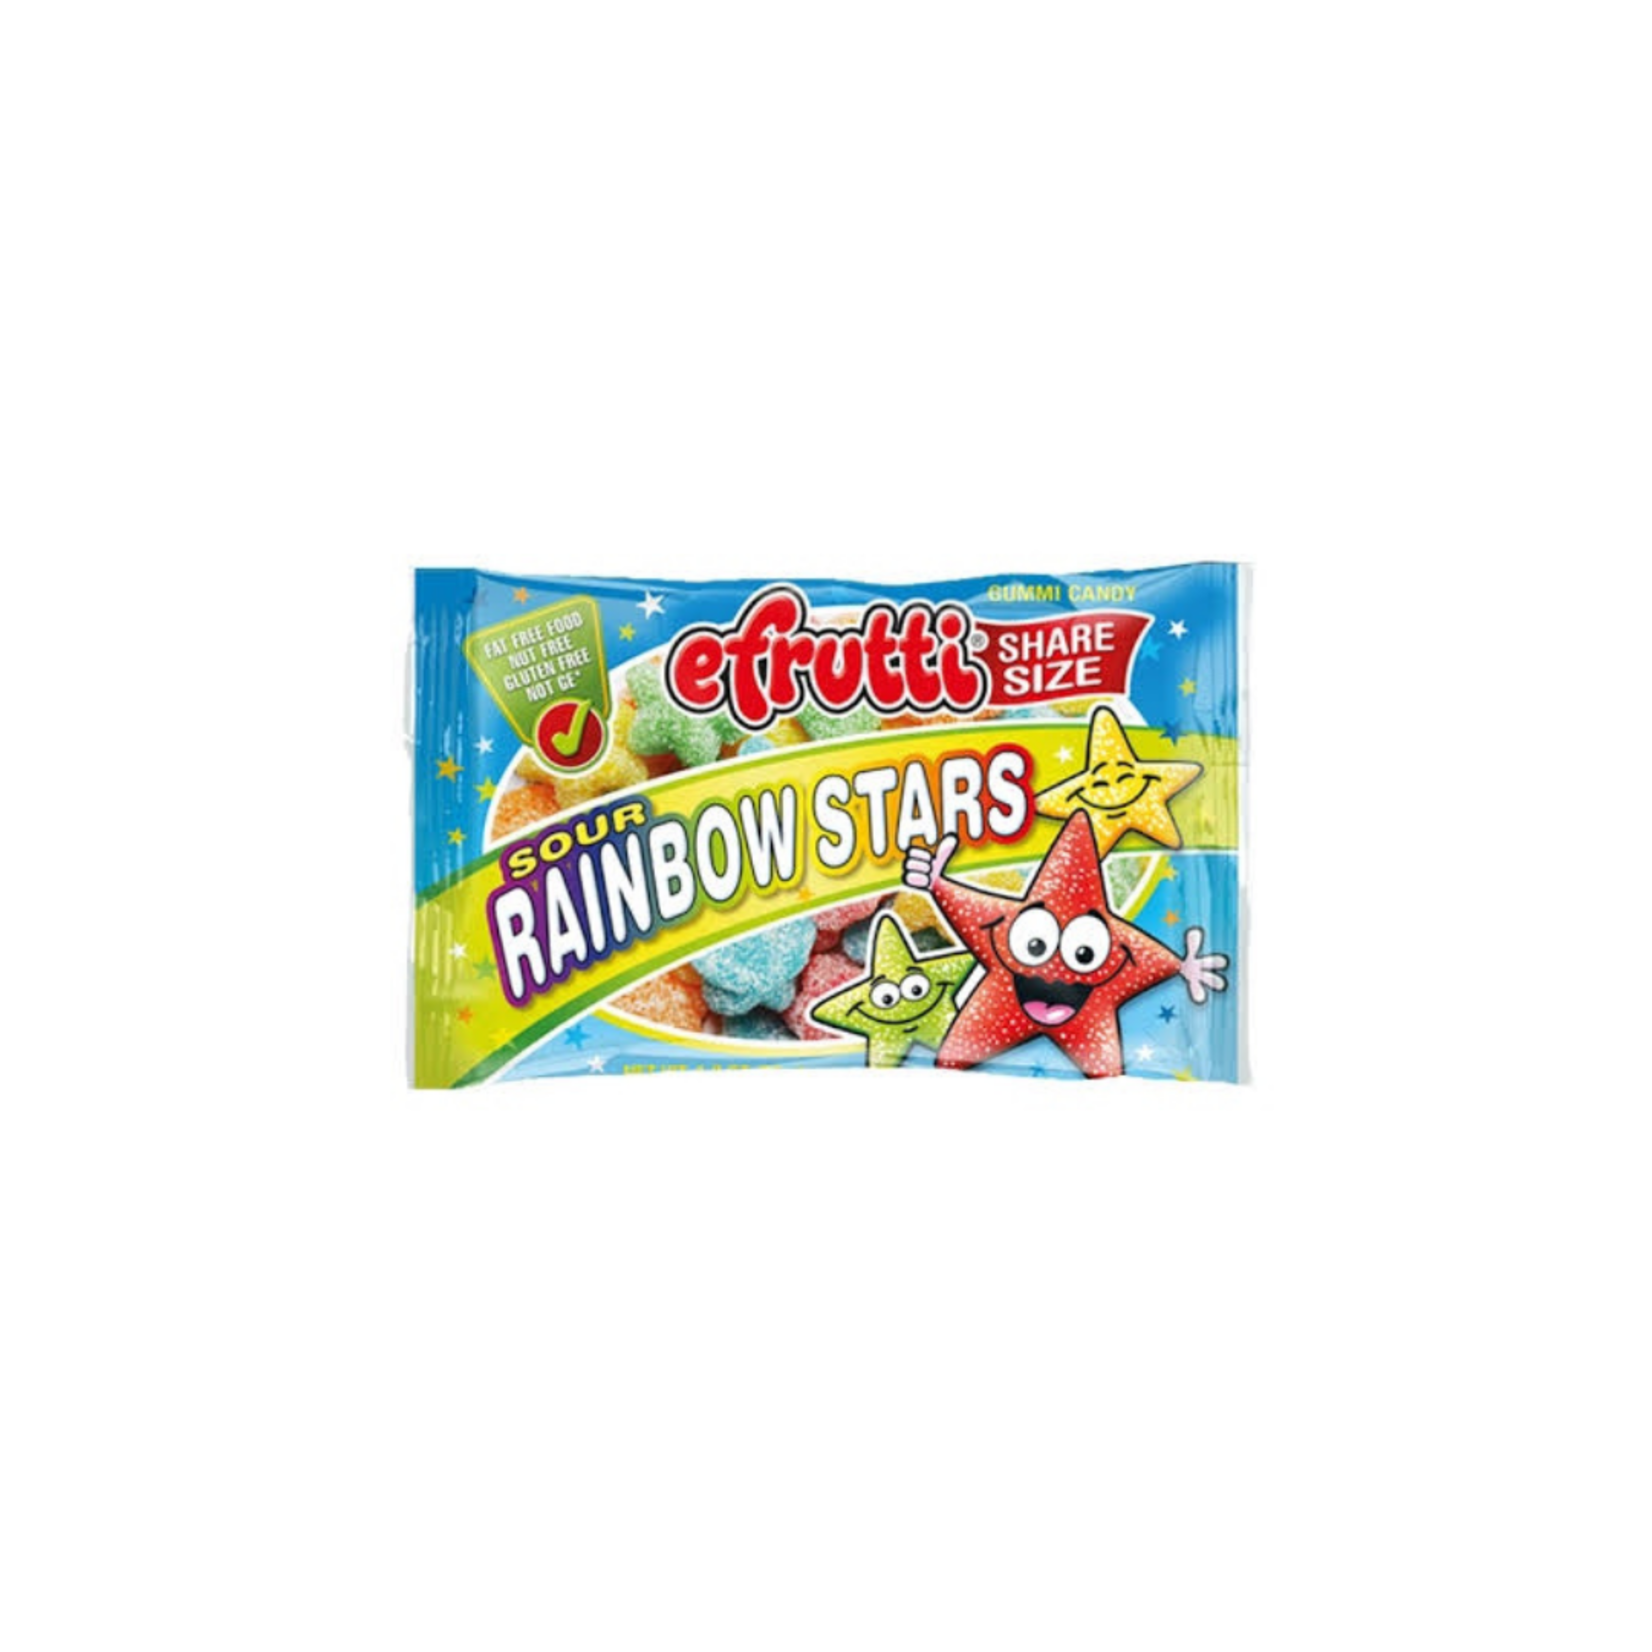 efrutti Sour Rainbow Stars Gummi Share Size 12ct